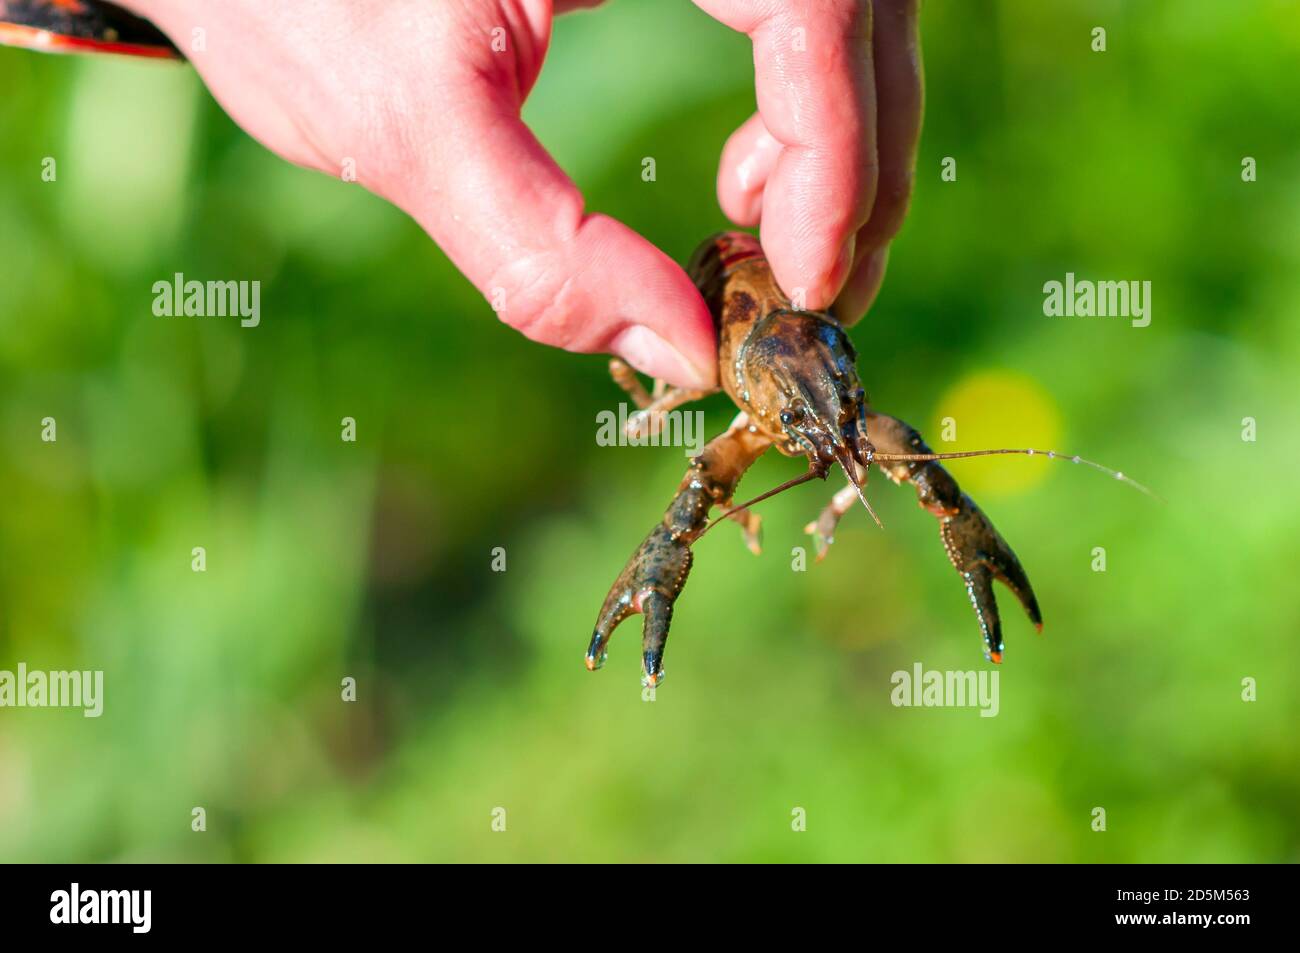 Astacus astacus, the European crayfish, noble crayfish, or broad-fingered crayfish, held ba a man. Stock Photo